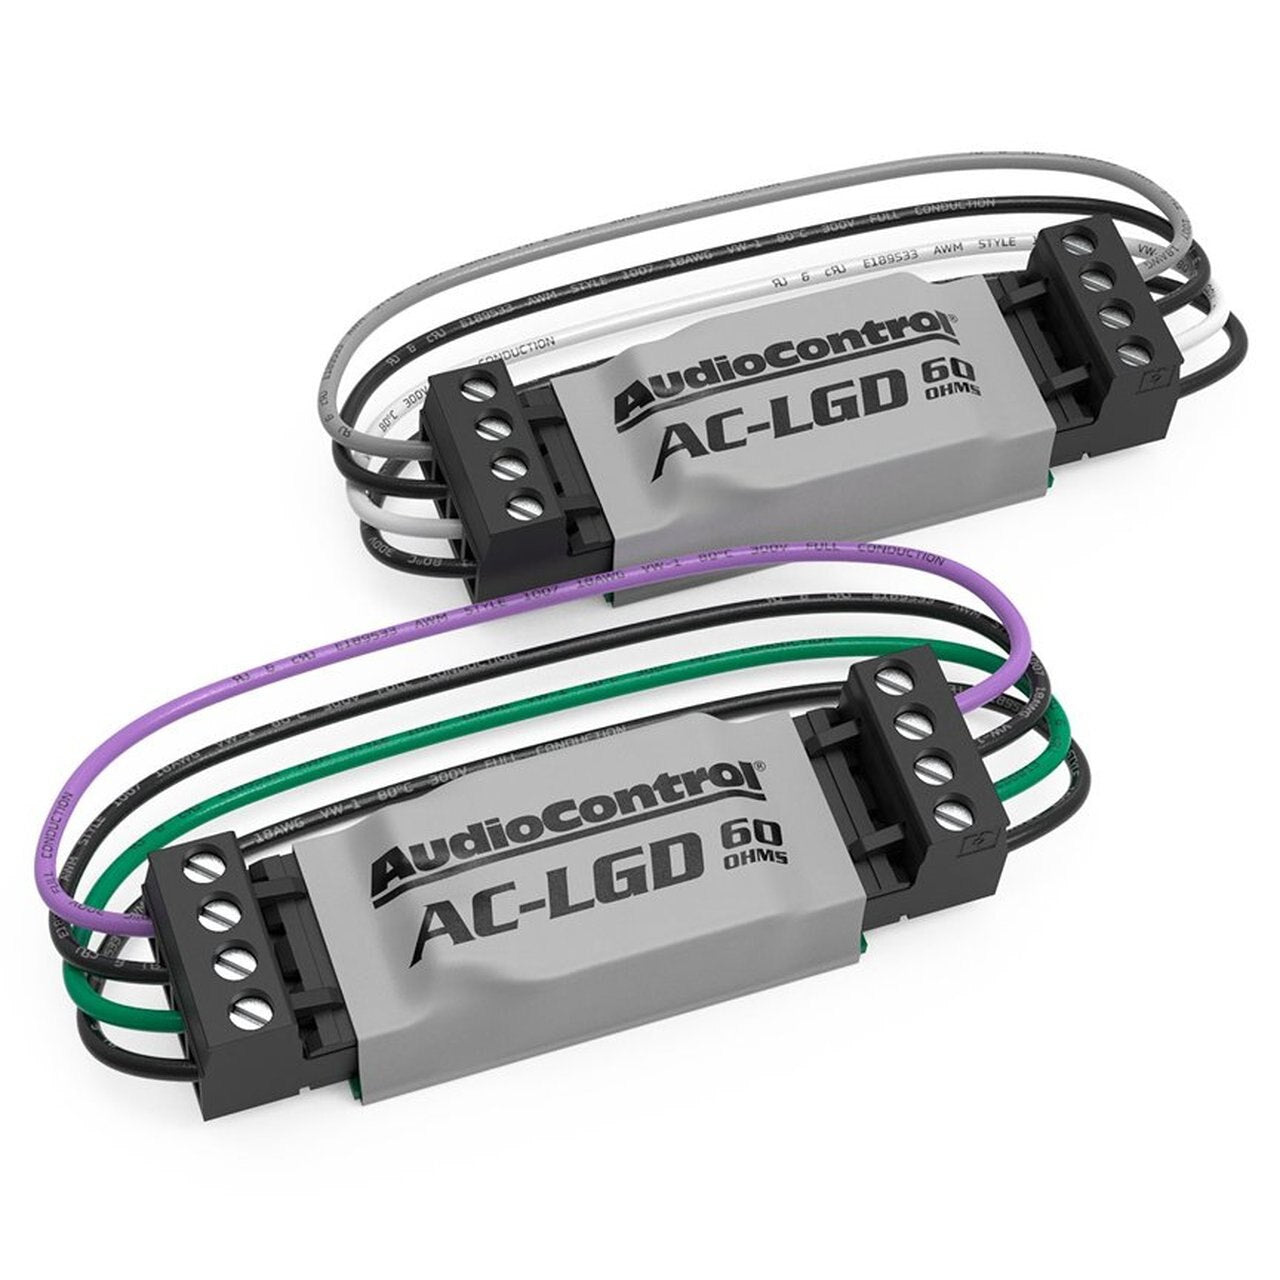 AudioControl AC-LGD 60, Load Generating Device & Signal Stabilizer